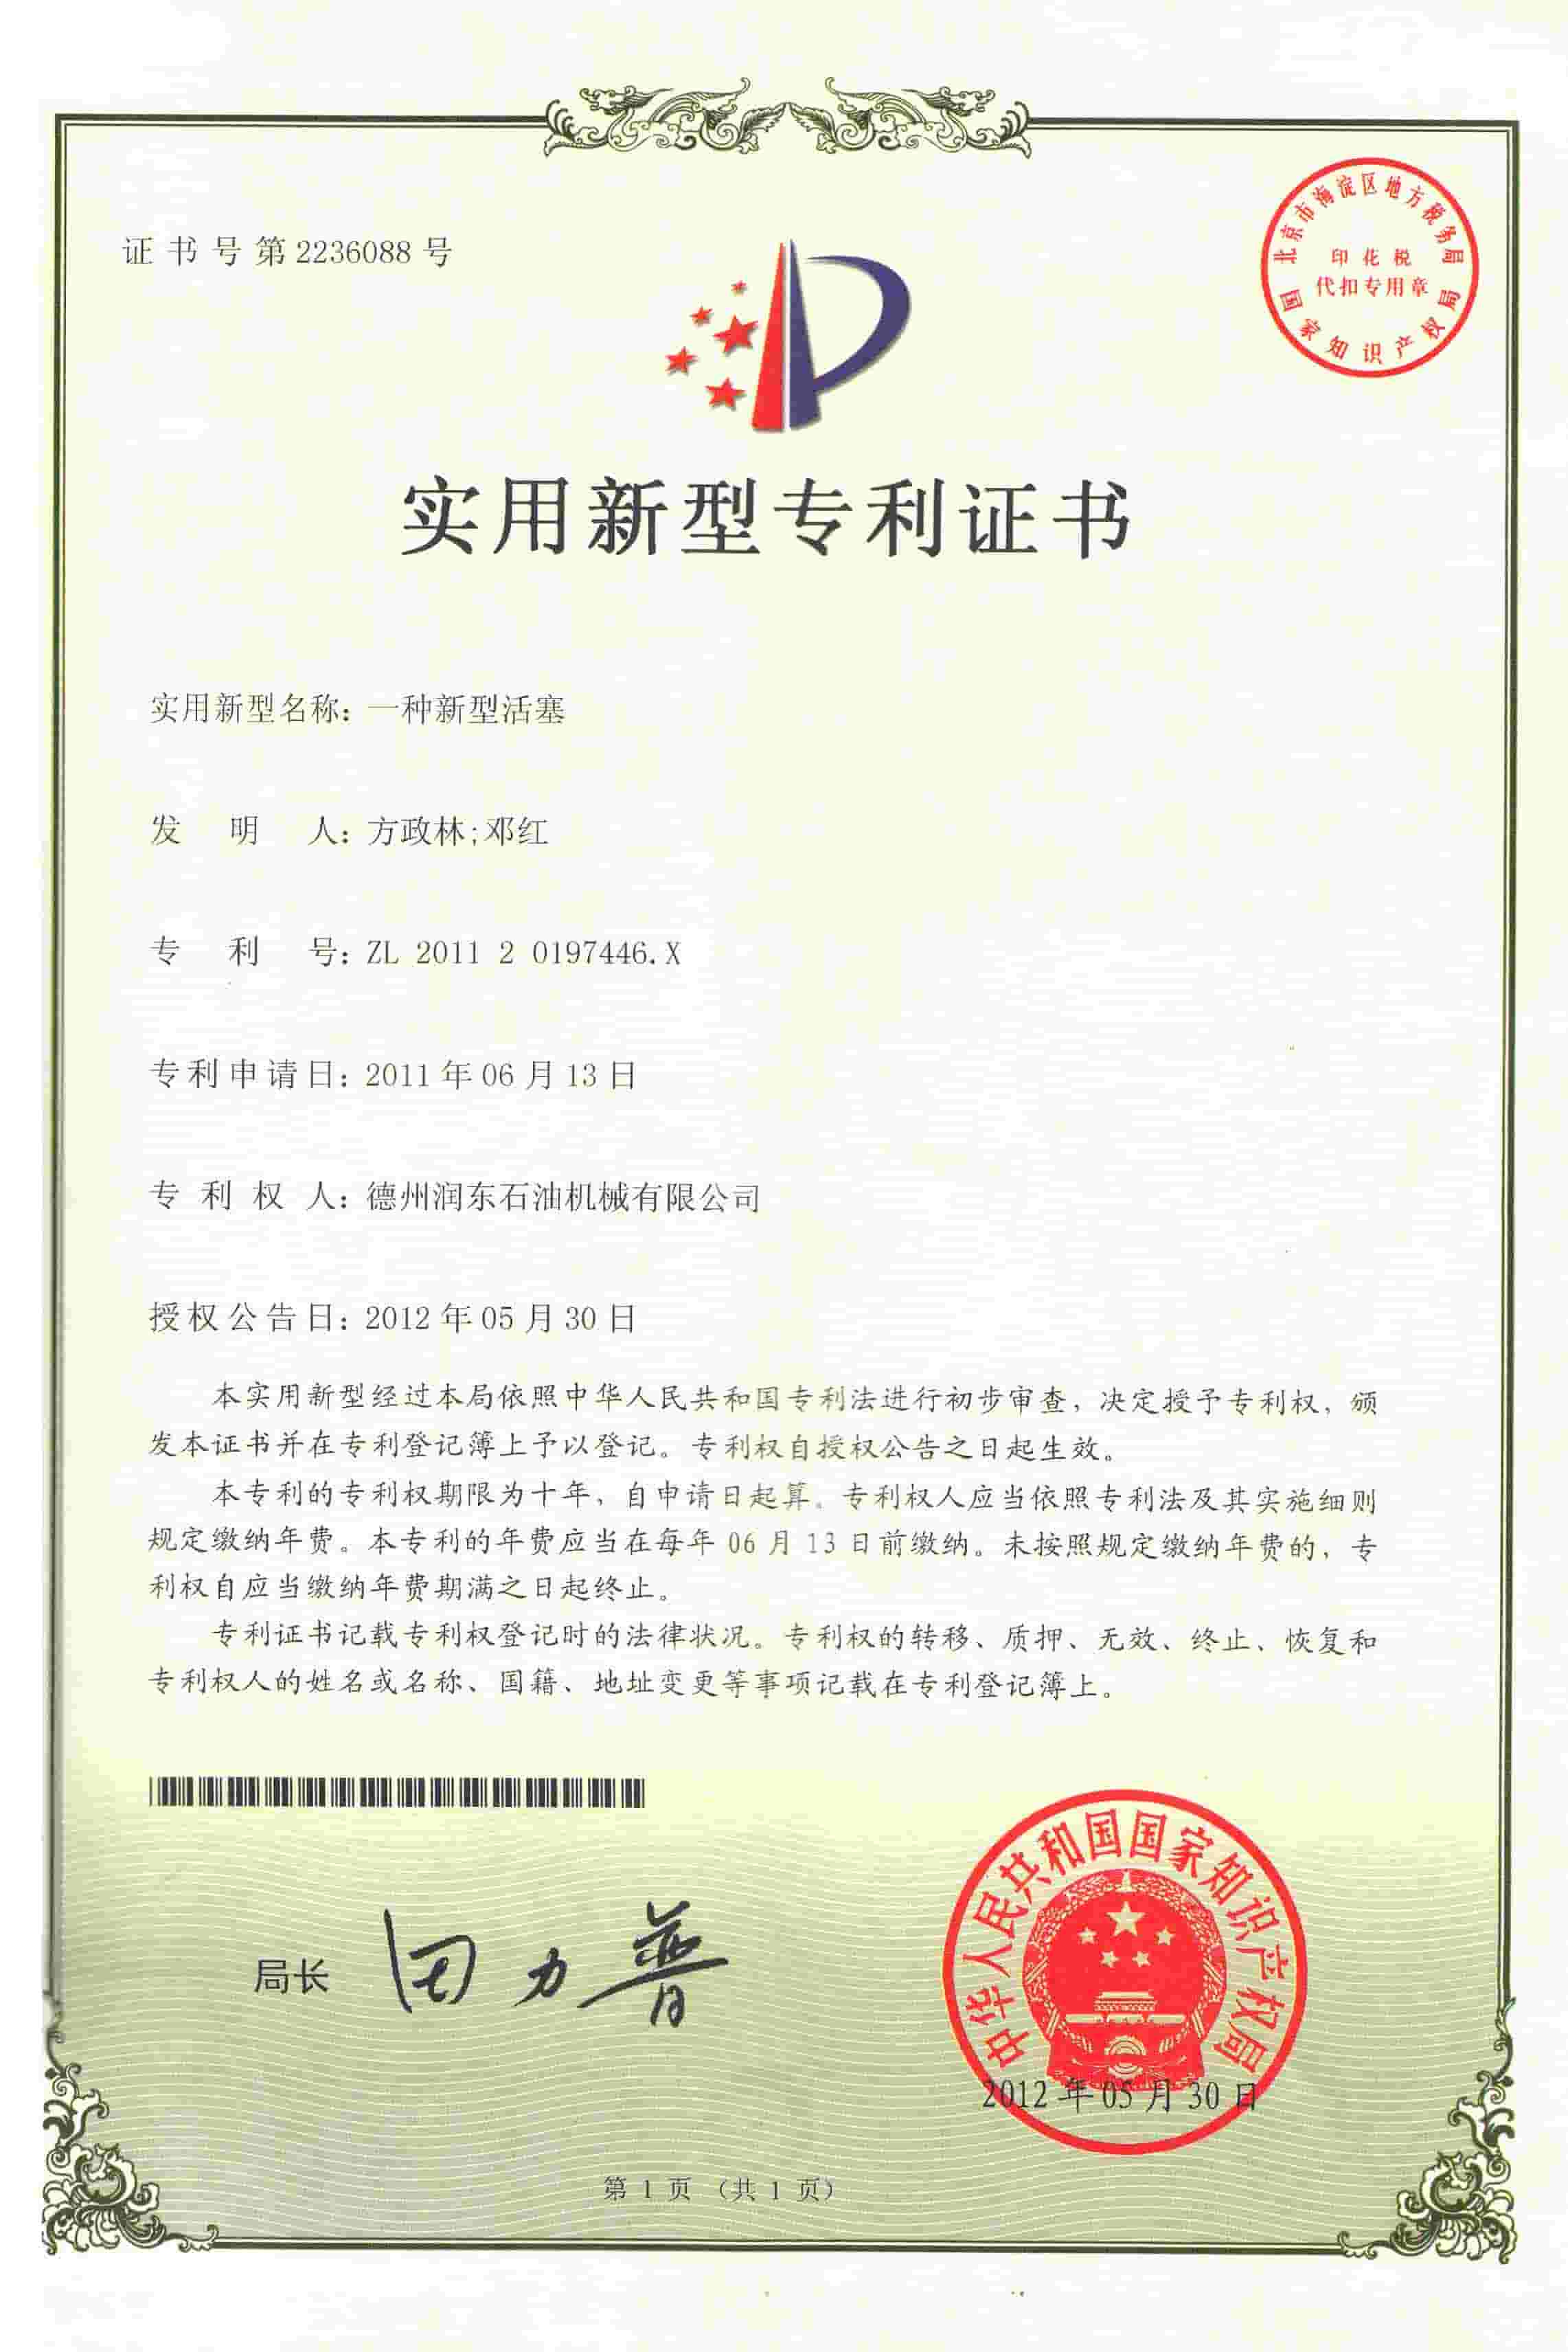 Honor Certificates